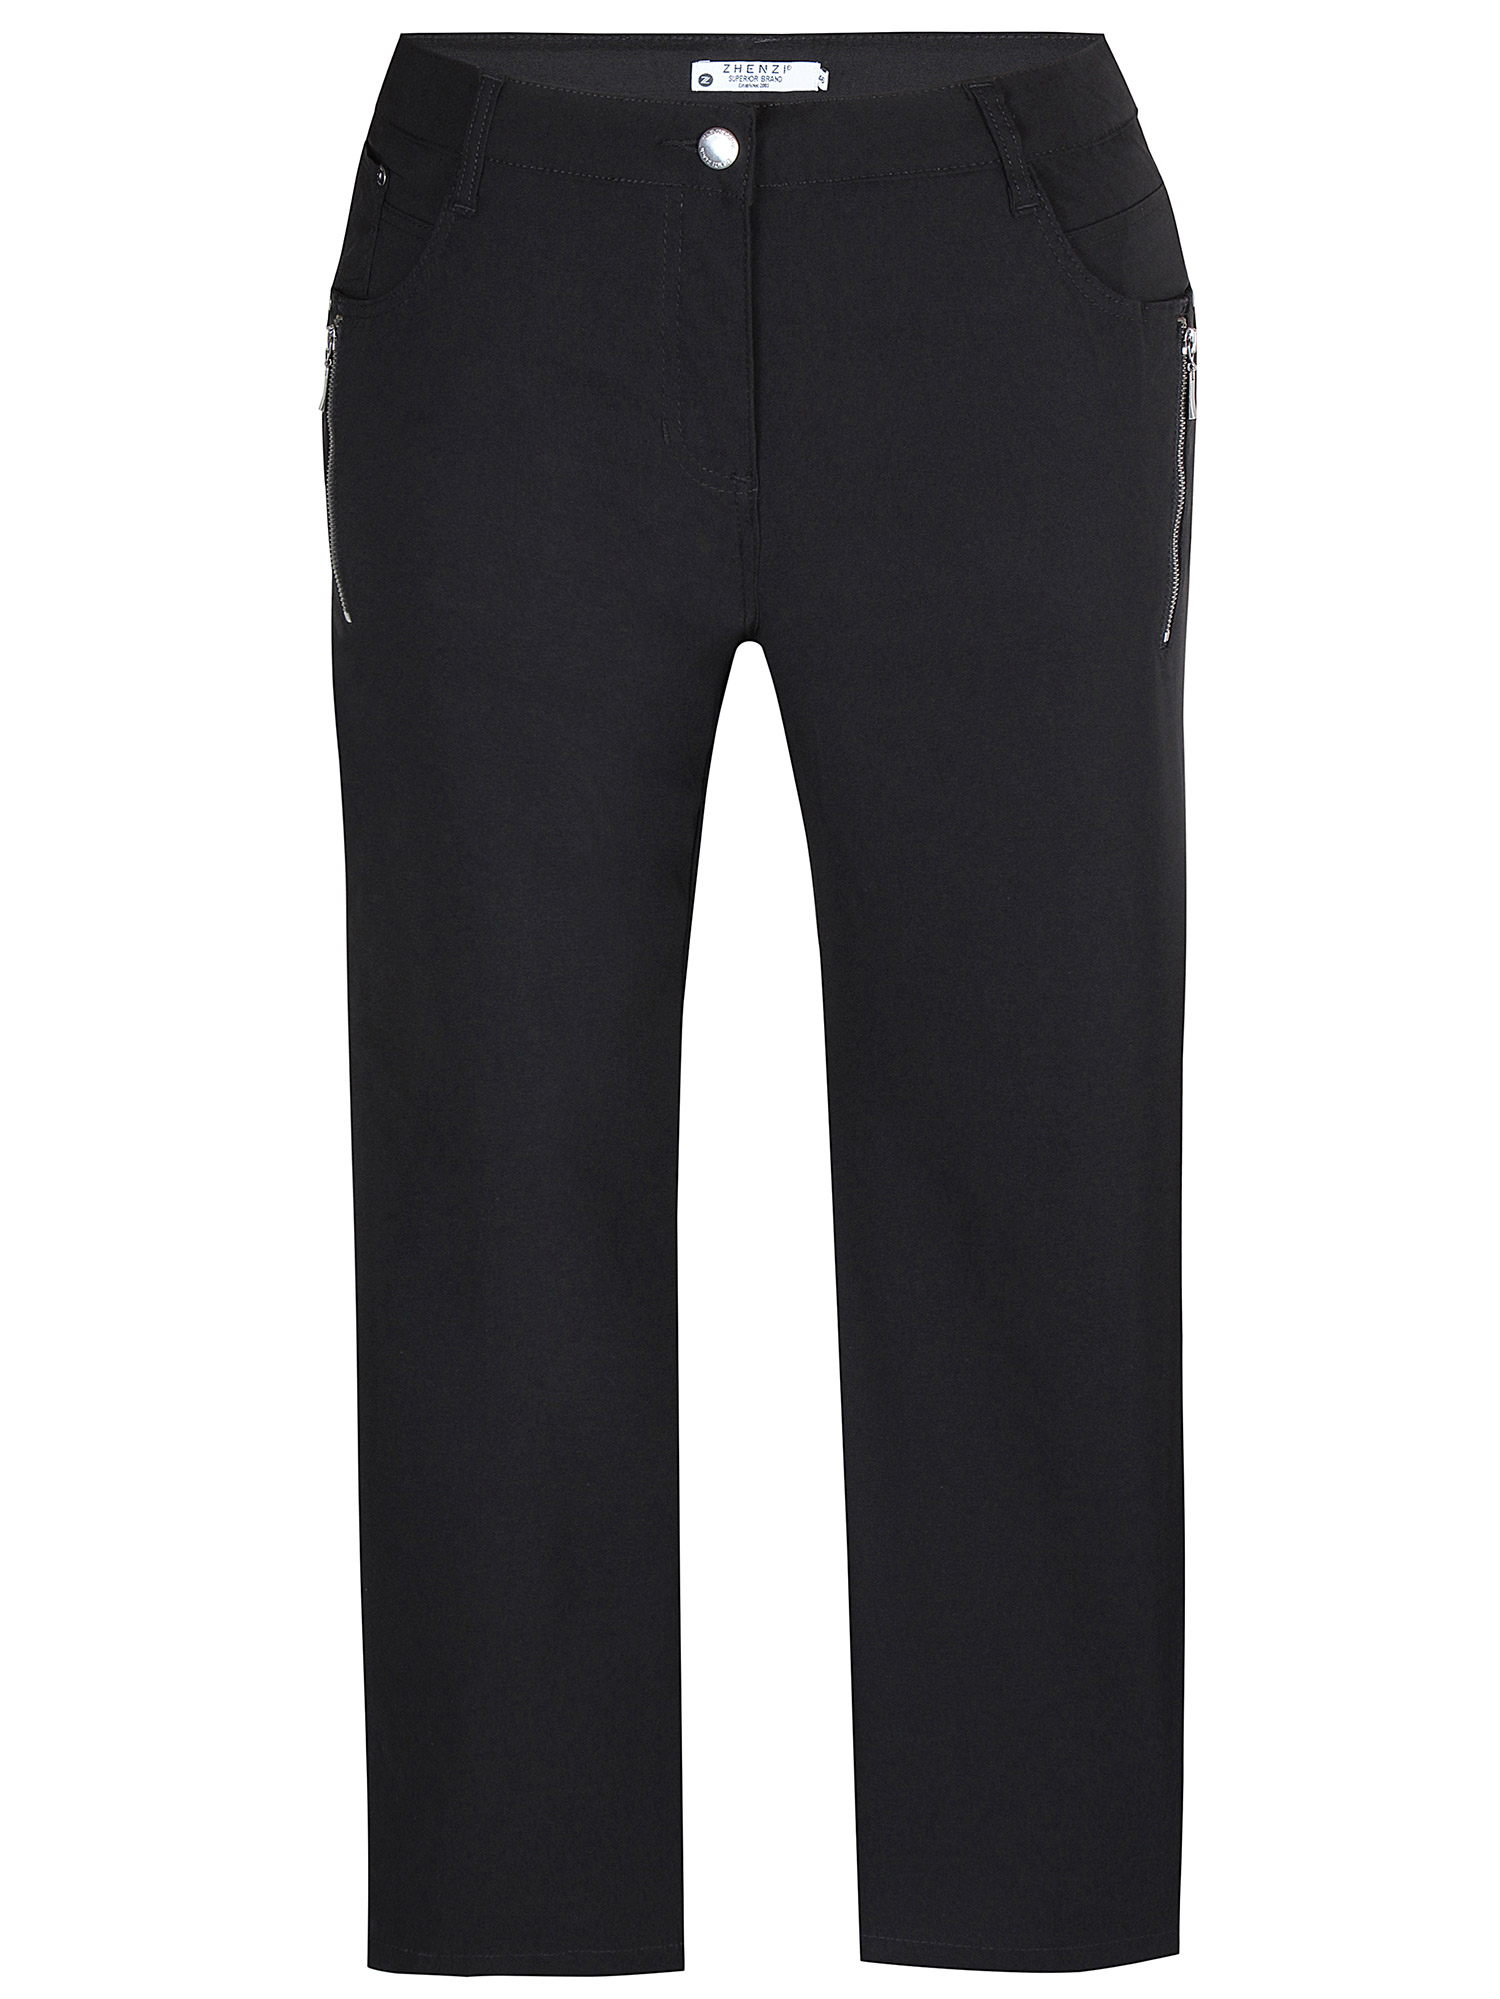 STEP - Svarte bukser med stretch fra Zhenzi